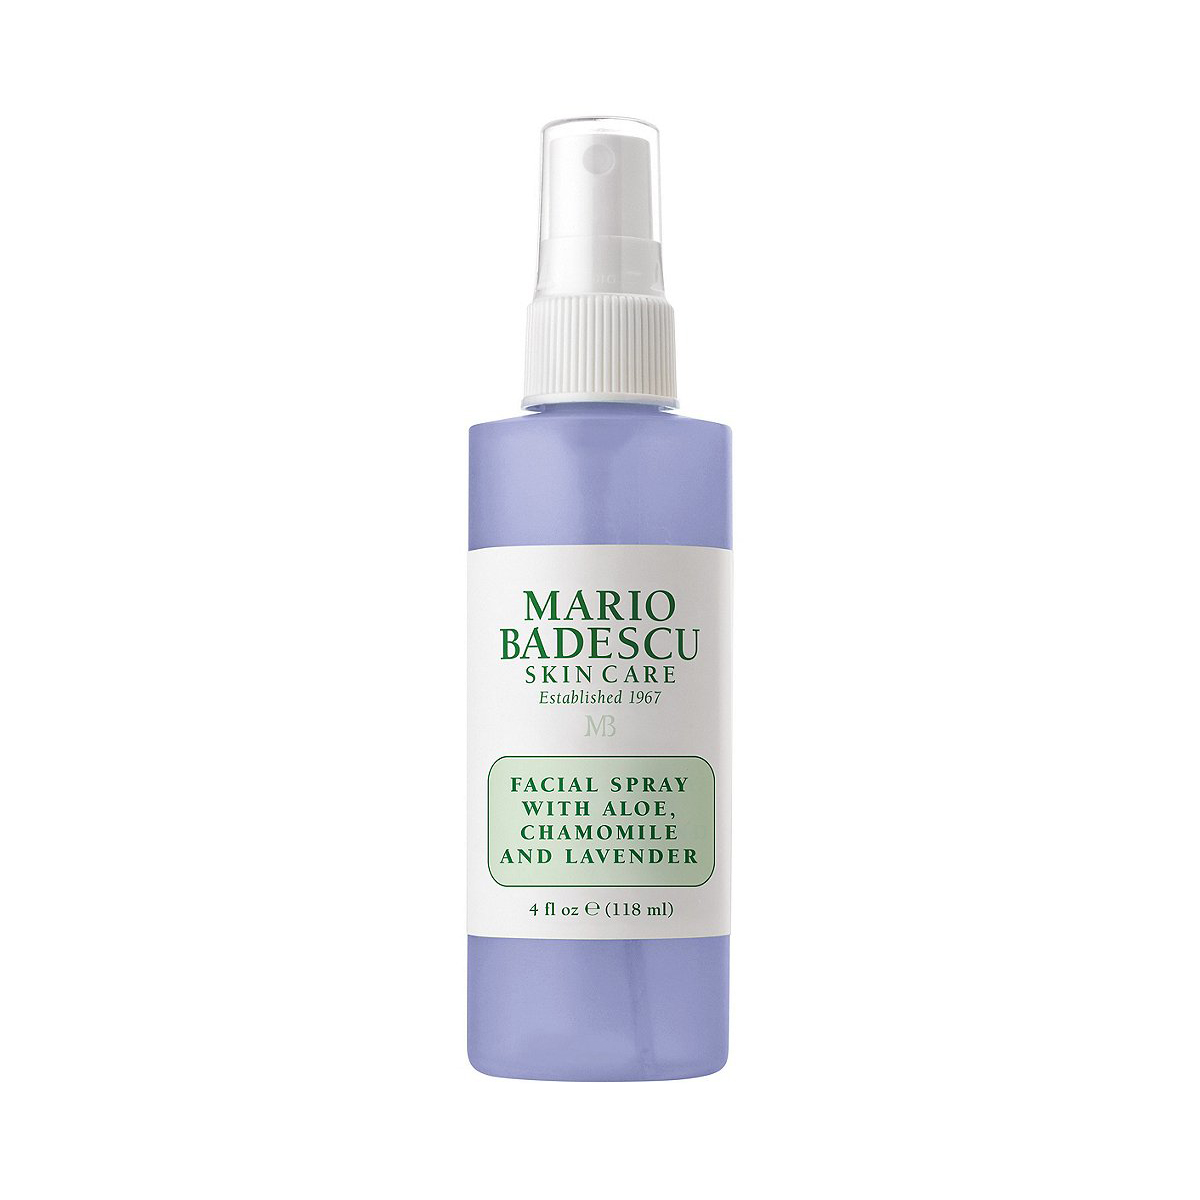 Mario Badescu Facial Spray With Aloe, Chamomile and Lavender